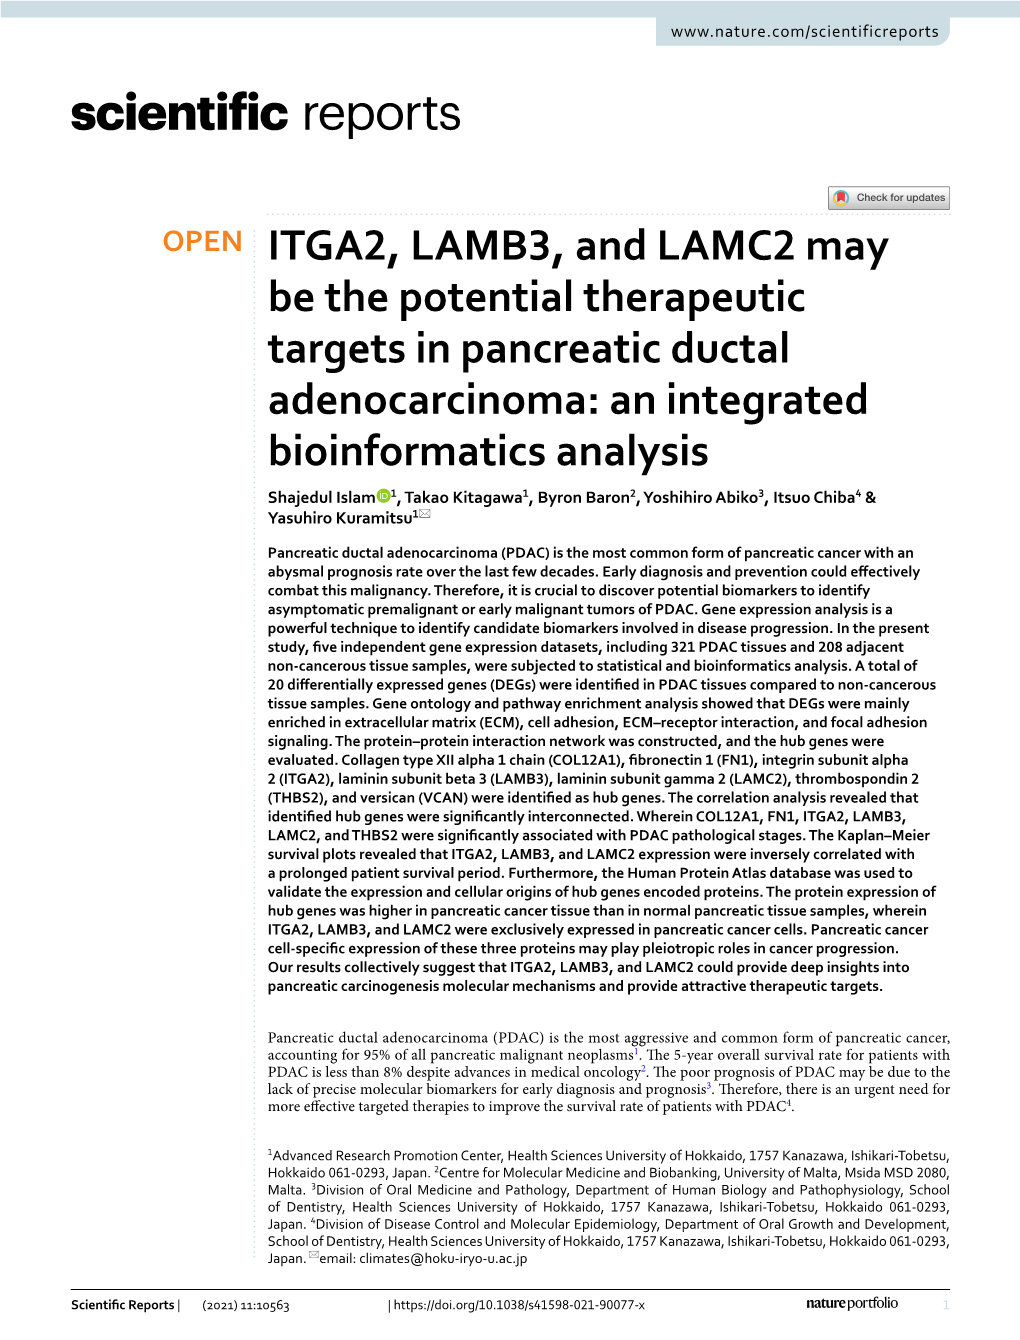 ITGA2, LAMB3, and LAMC2 May Be the Potential Therapeutic